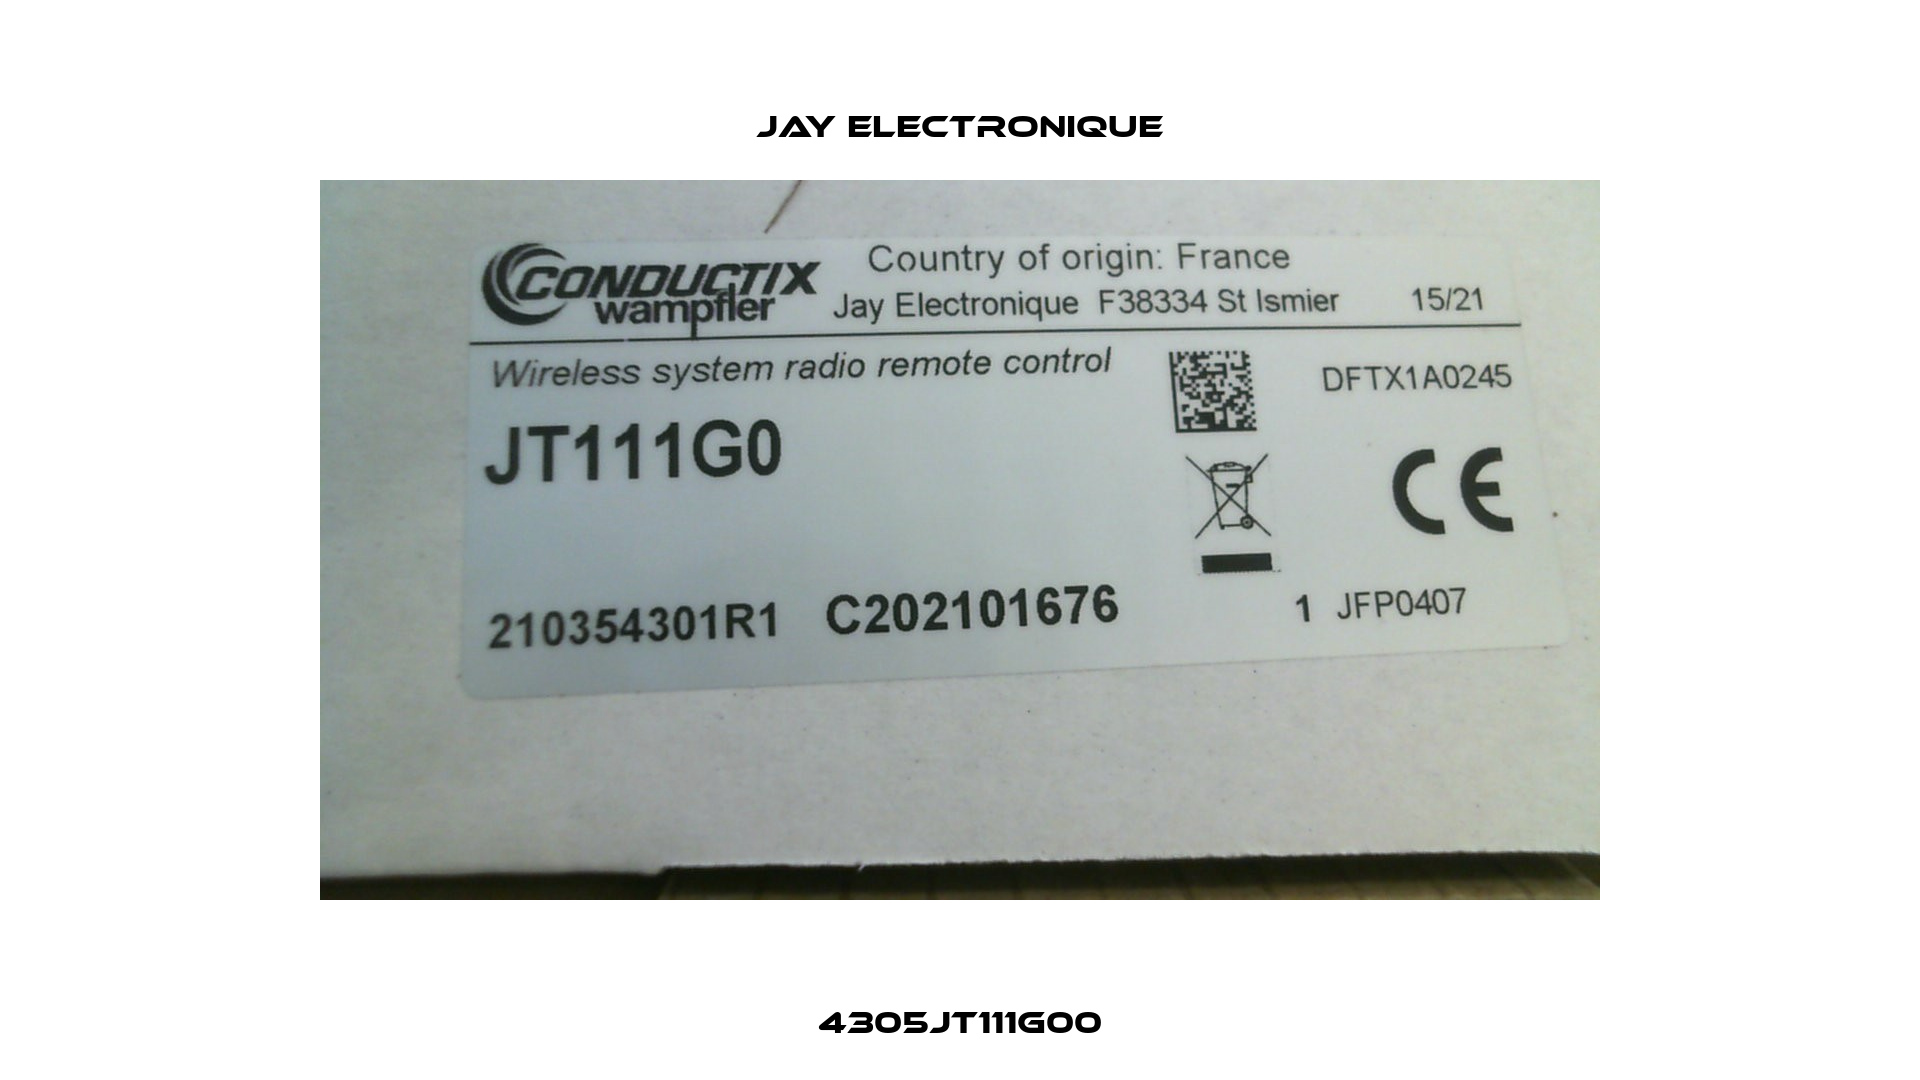 4305JT111G00 JAY Electronique